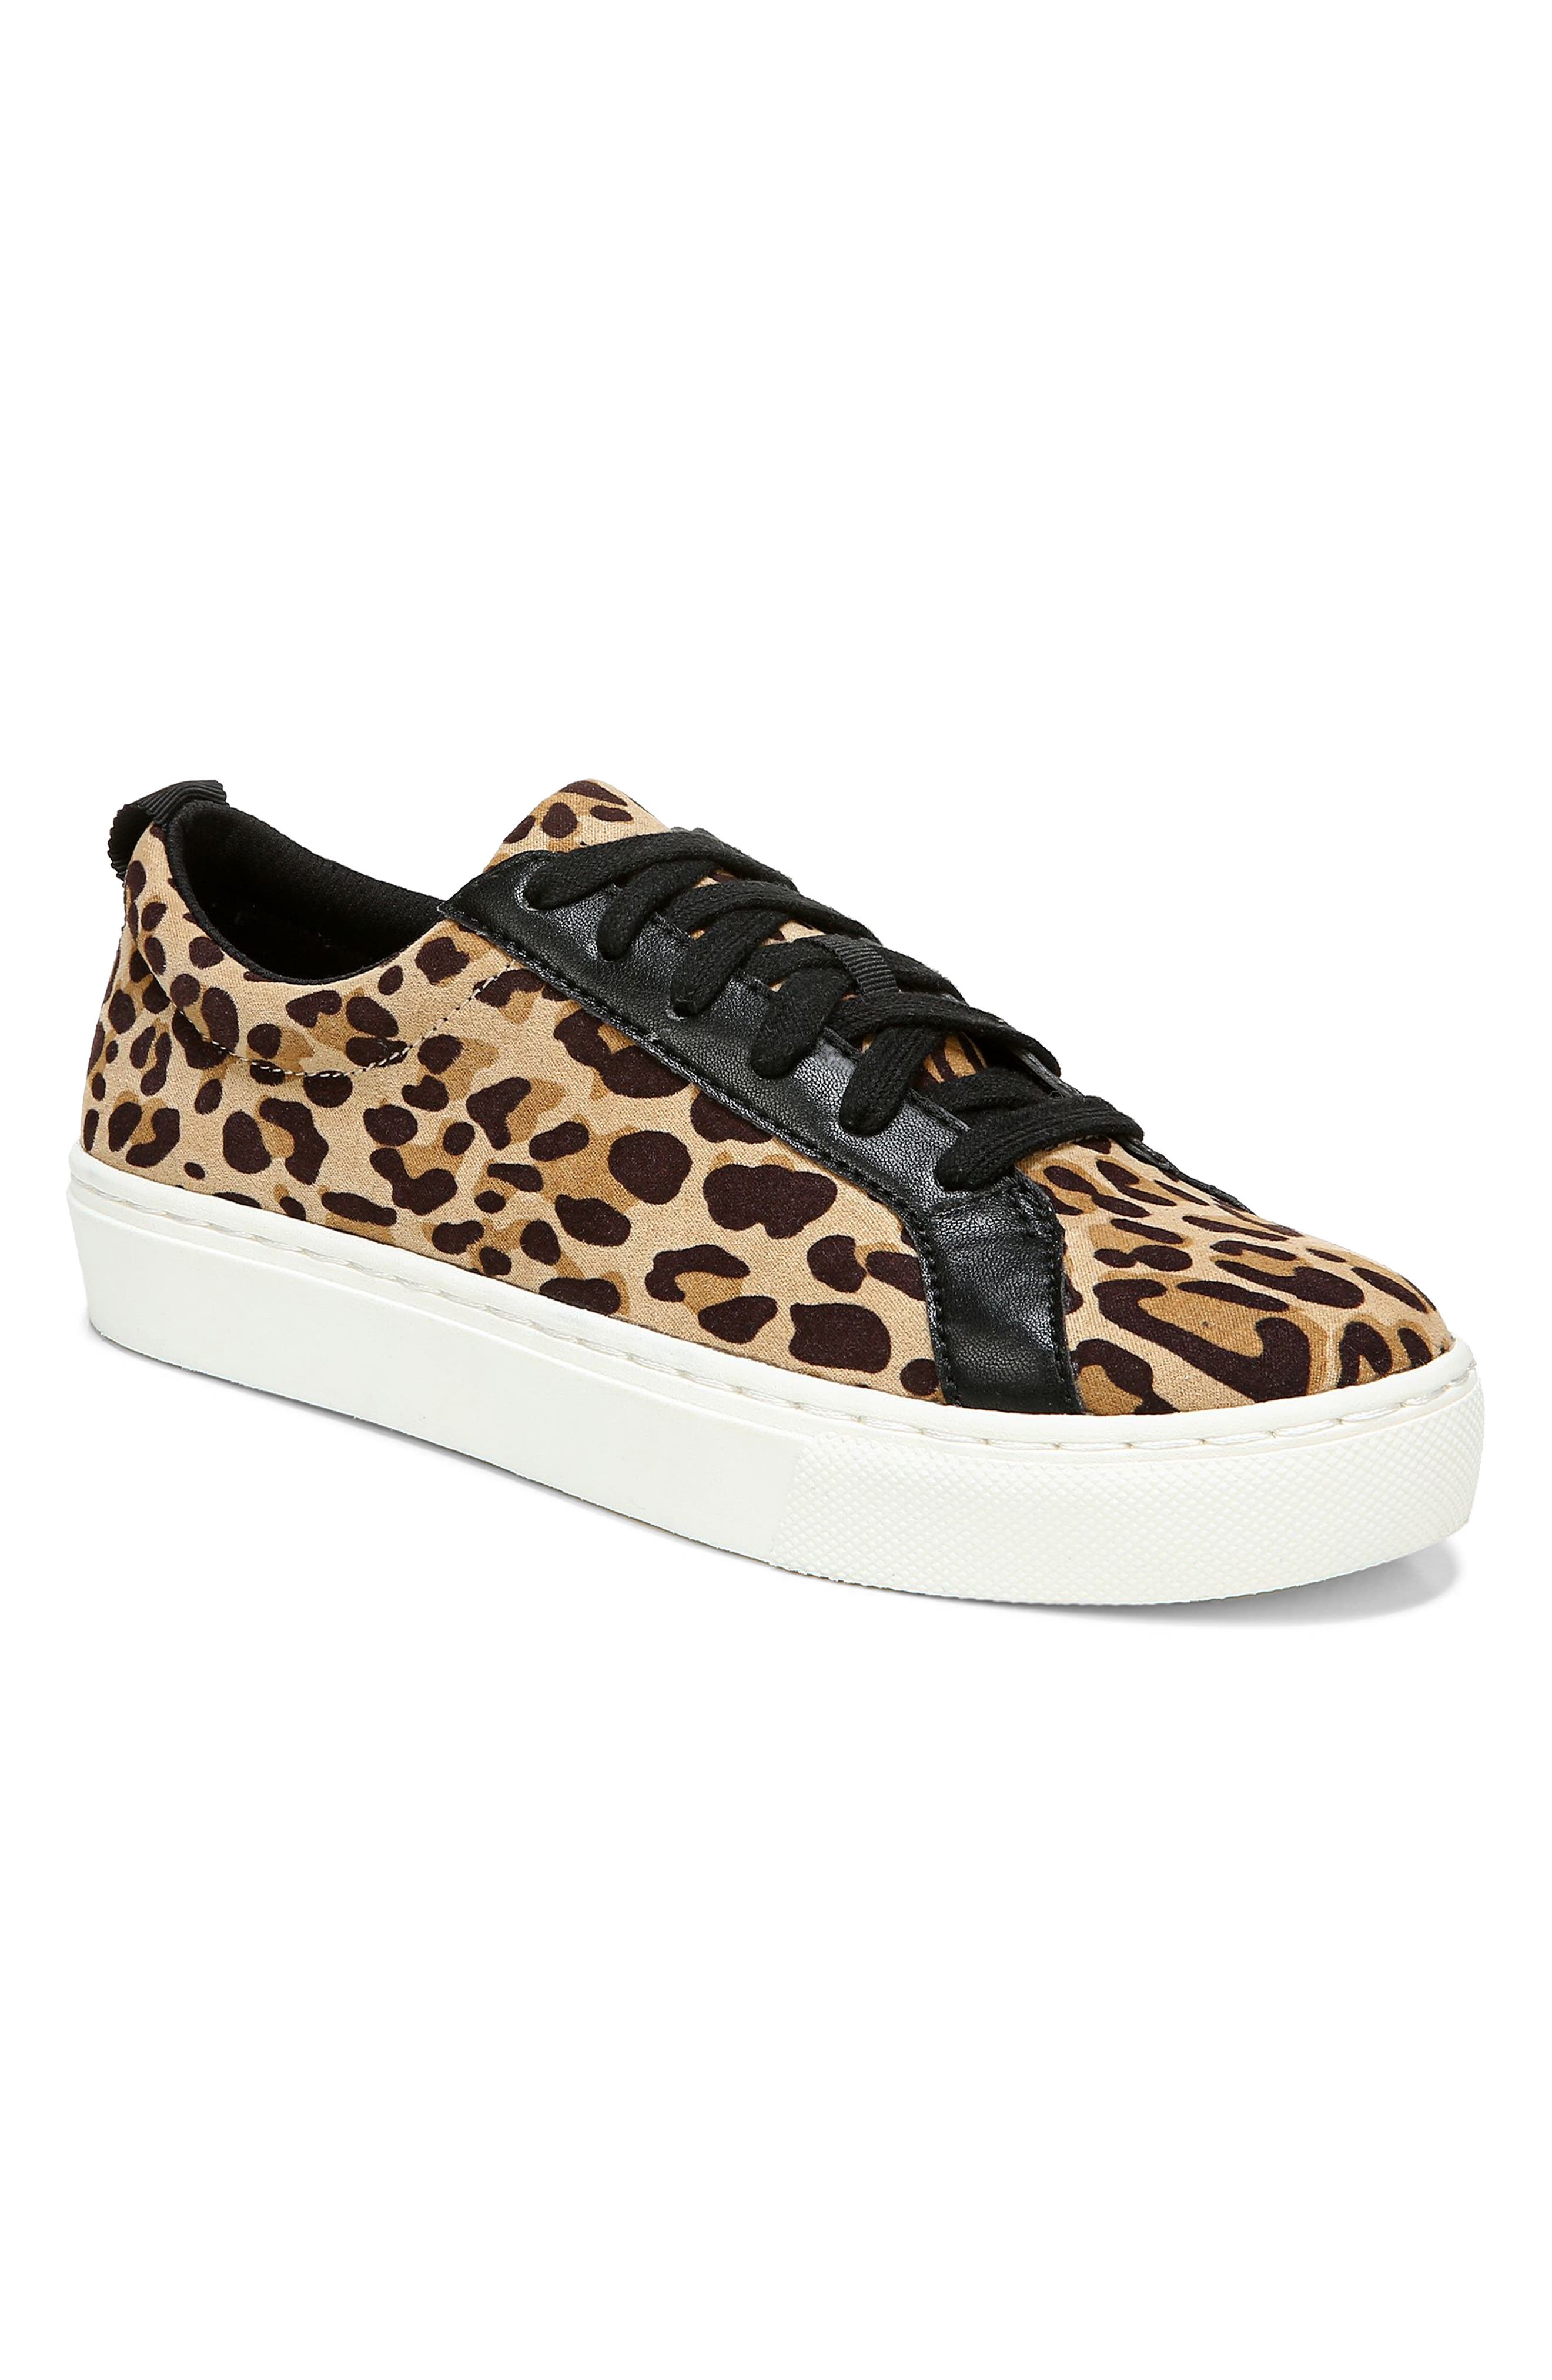 dr scholl's leopard sneakers